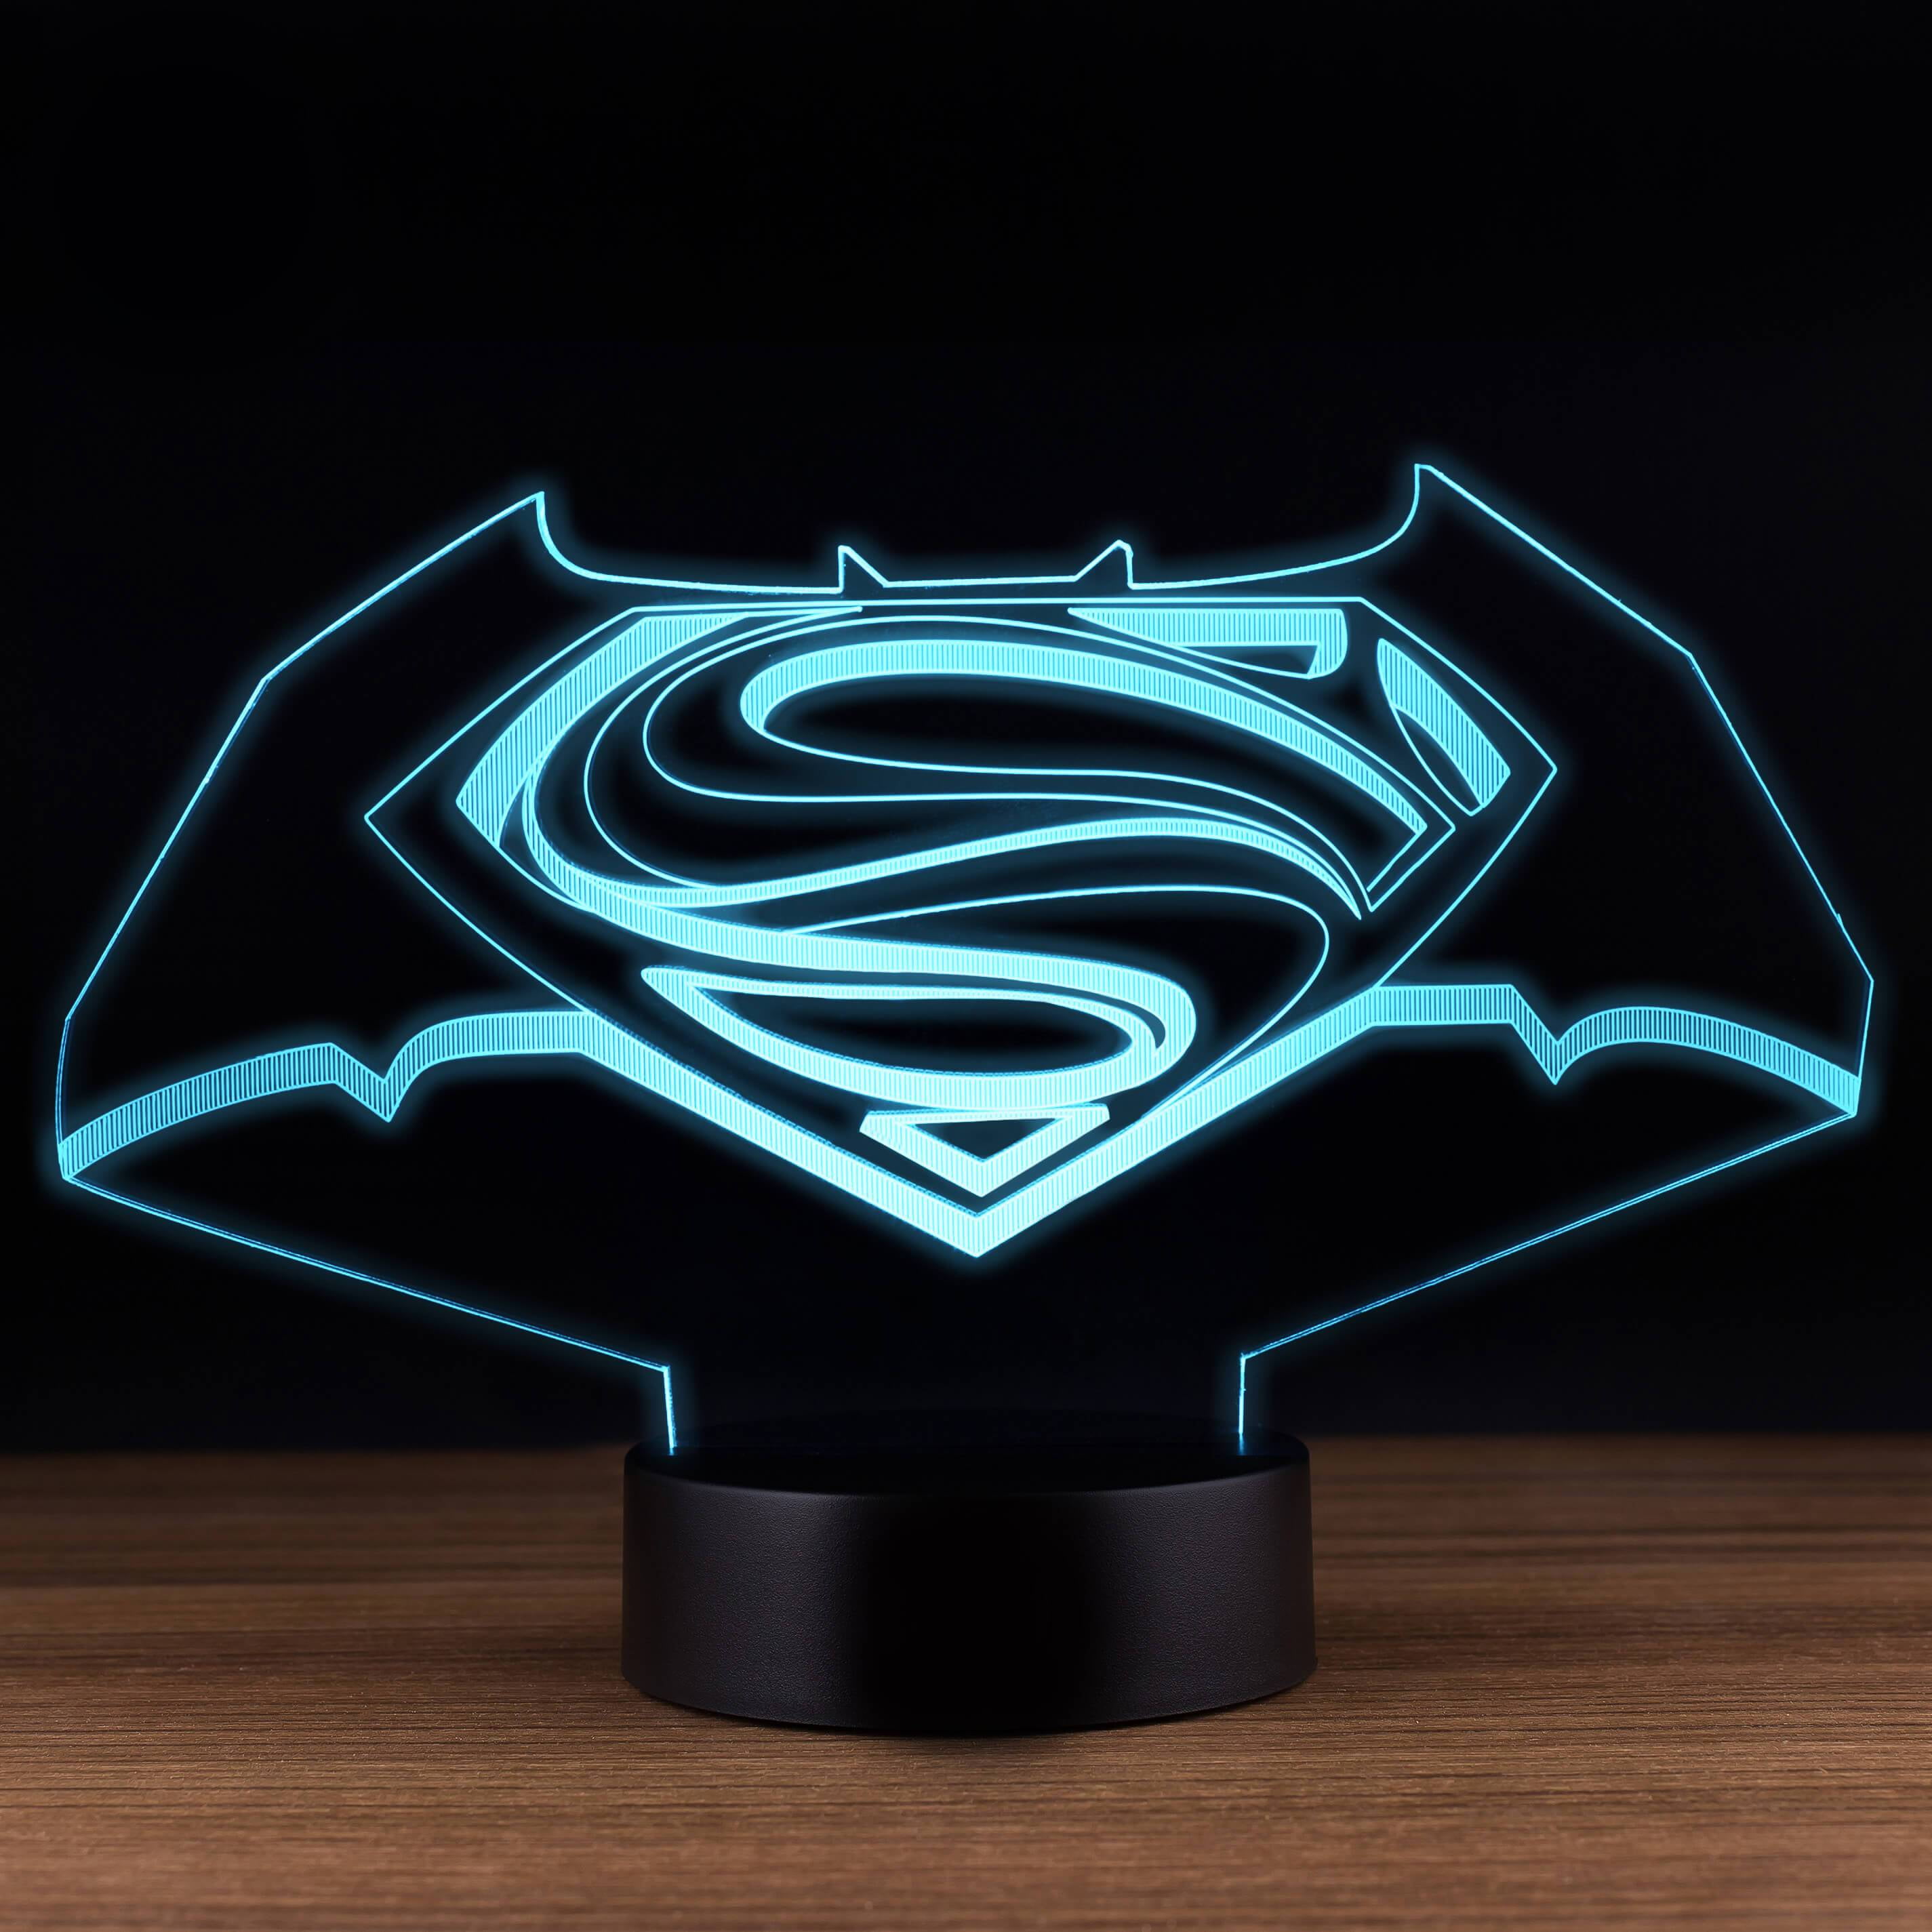 3D LED Batman Logo  Night Light Illusion Table Desk Lamp Different Colors